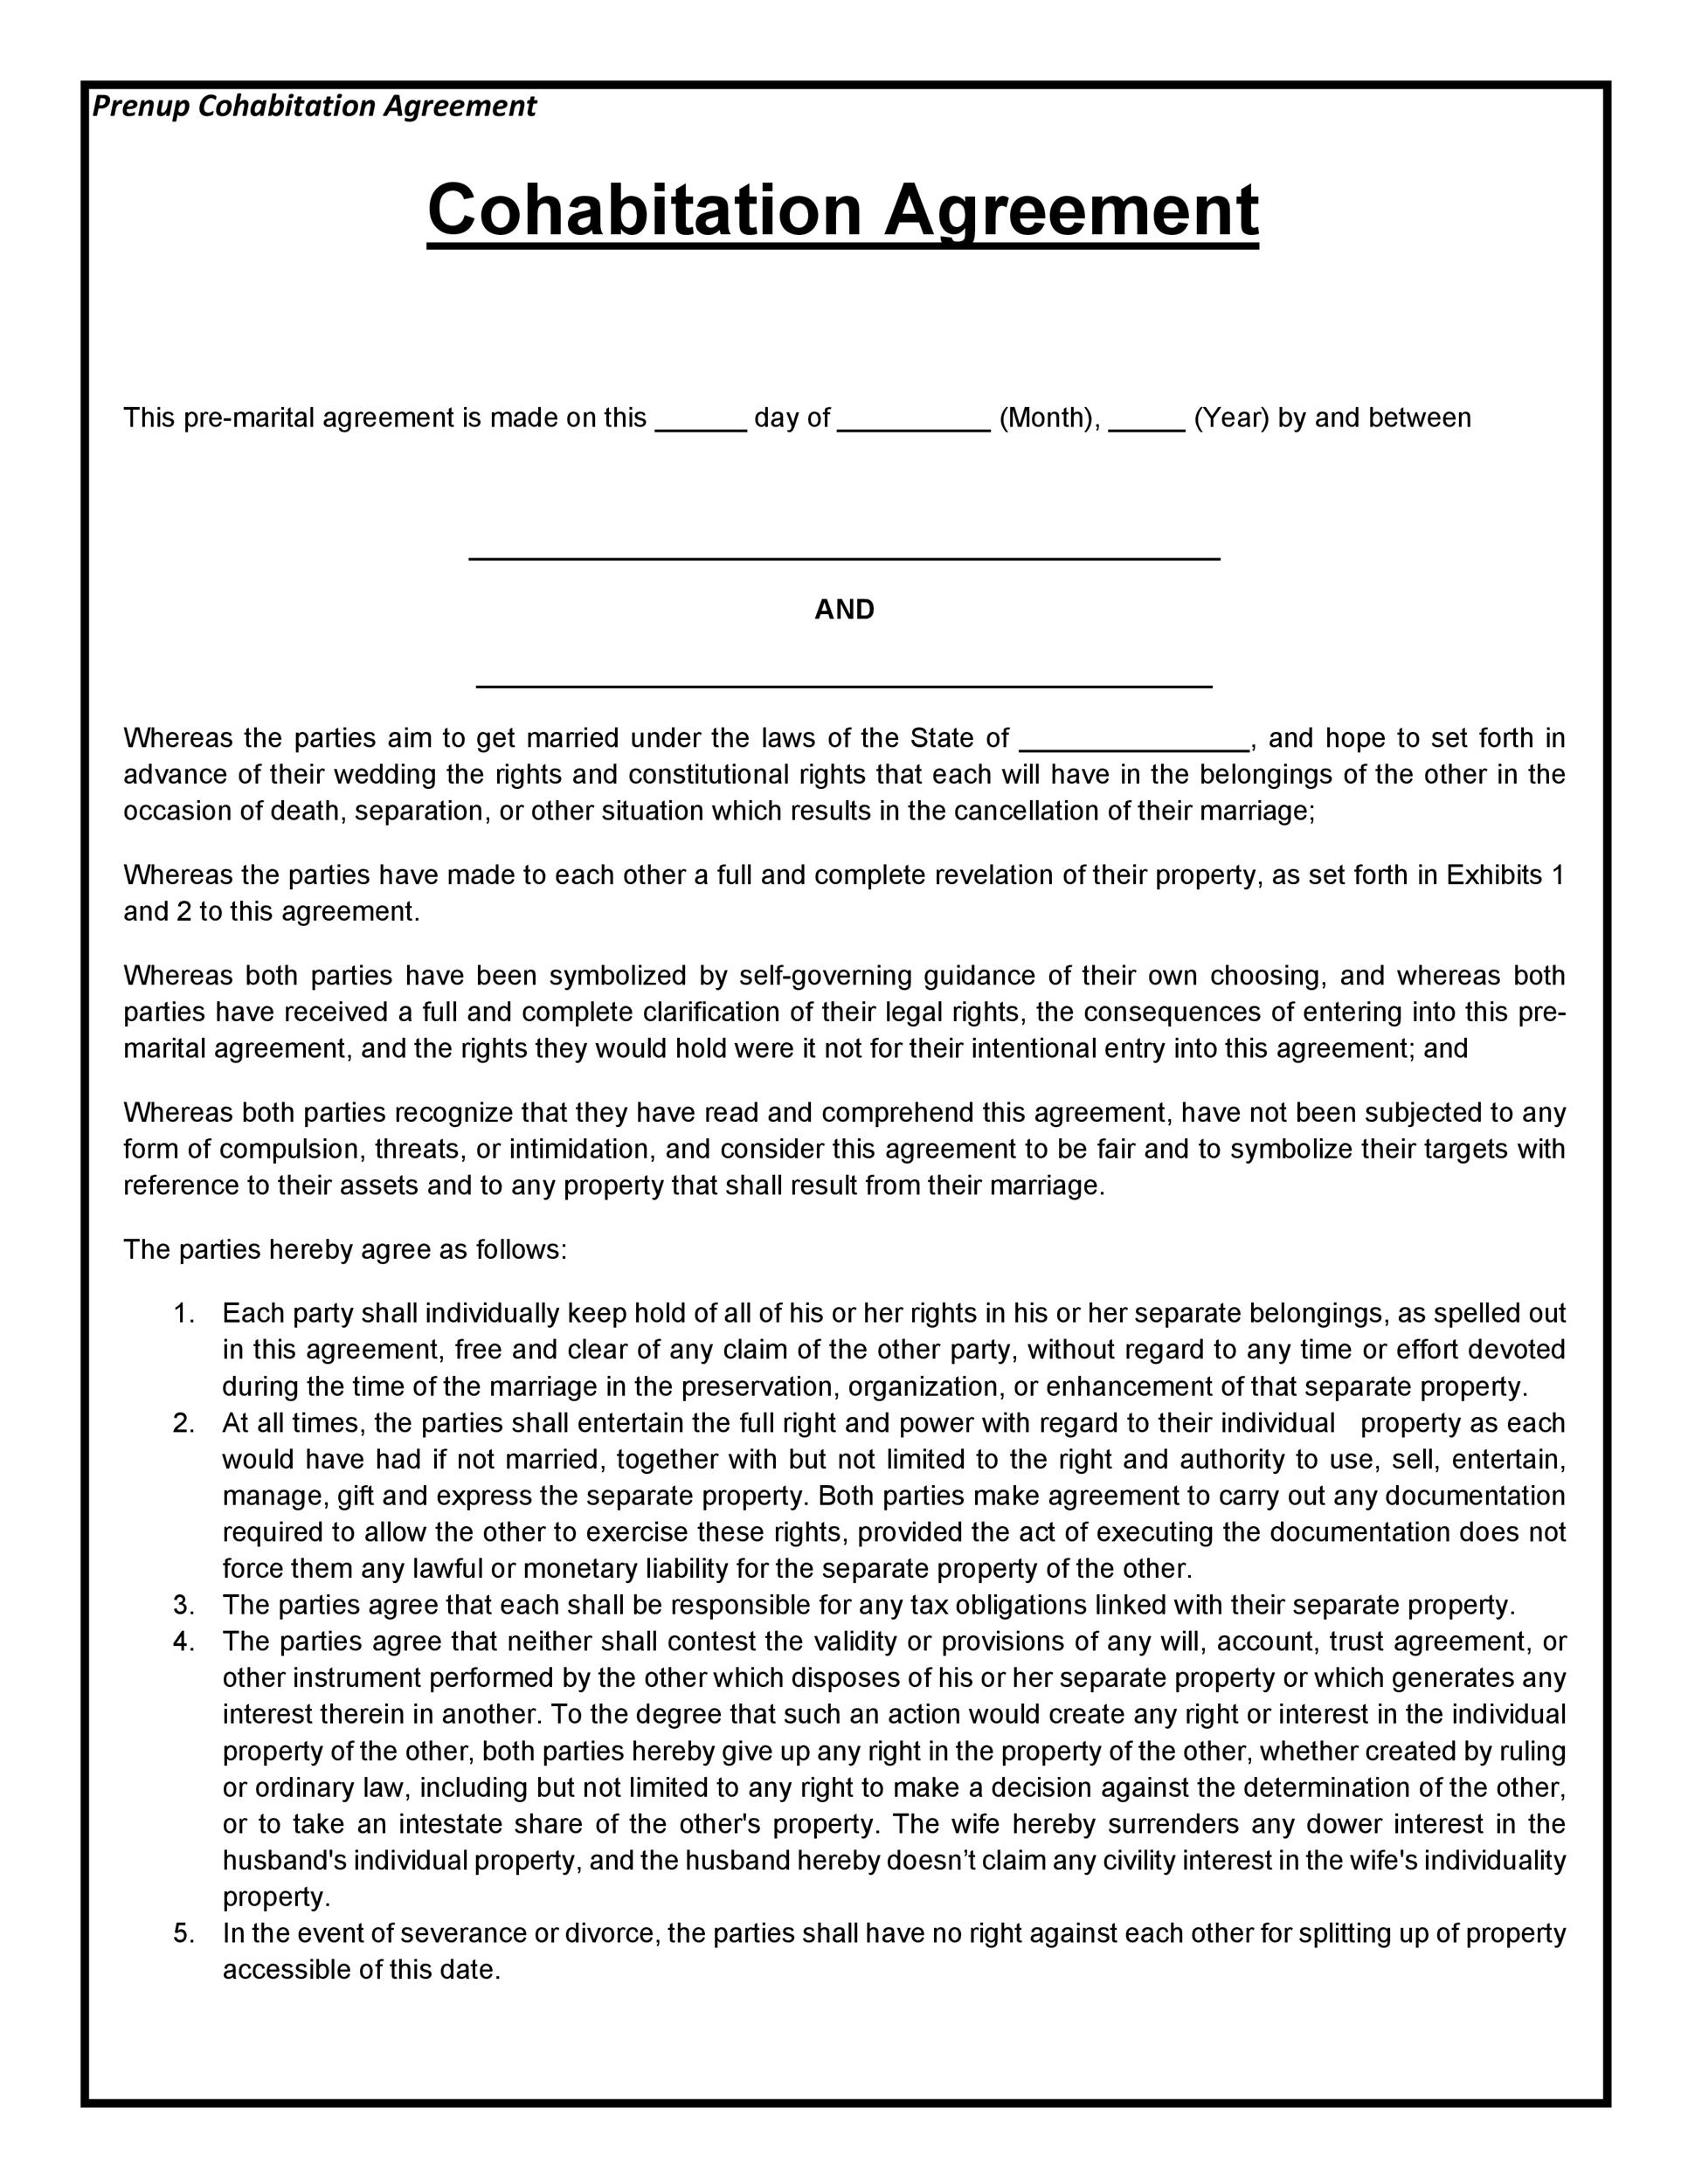 Free cohabitation agreement template 18